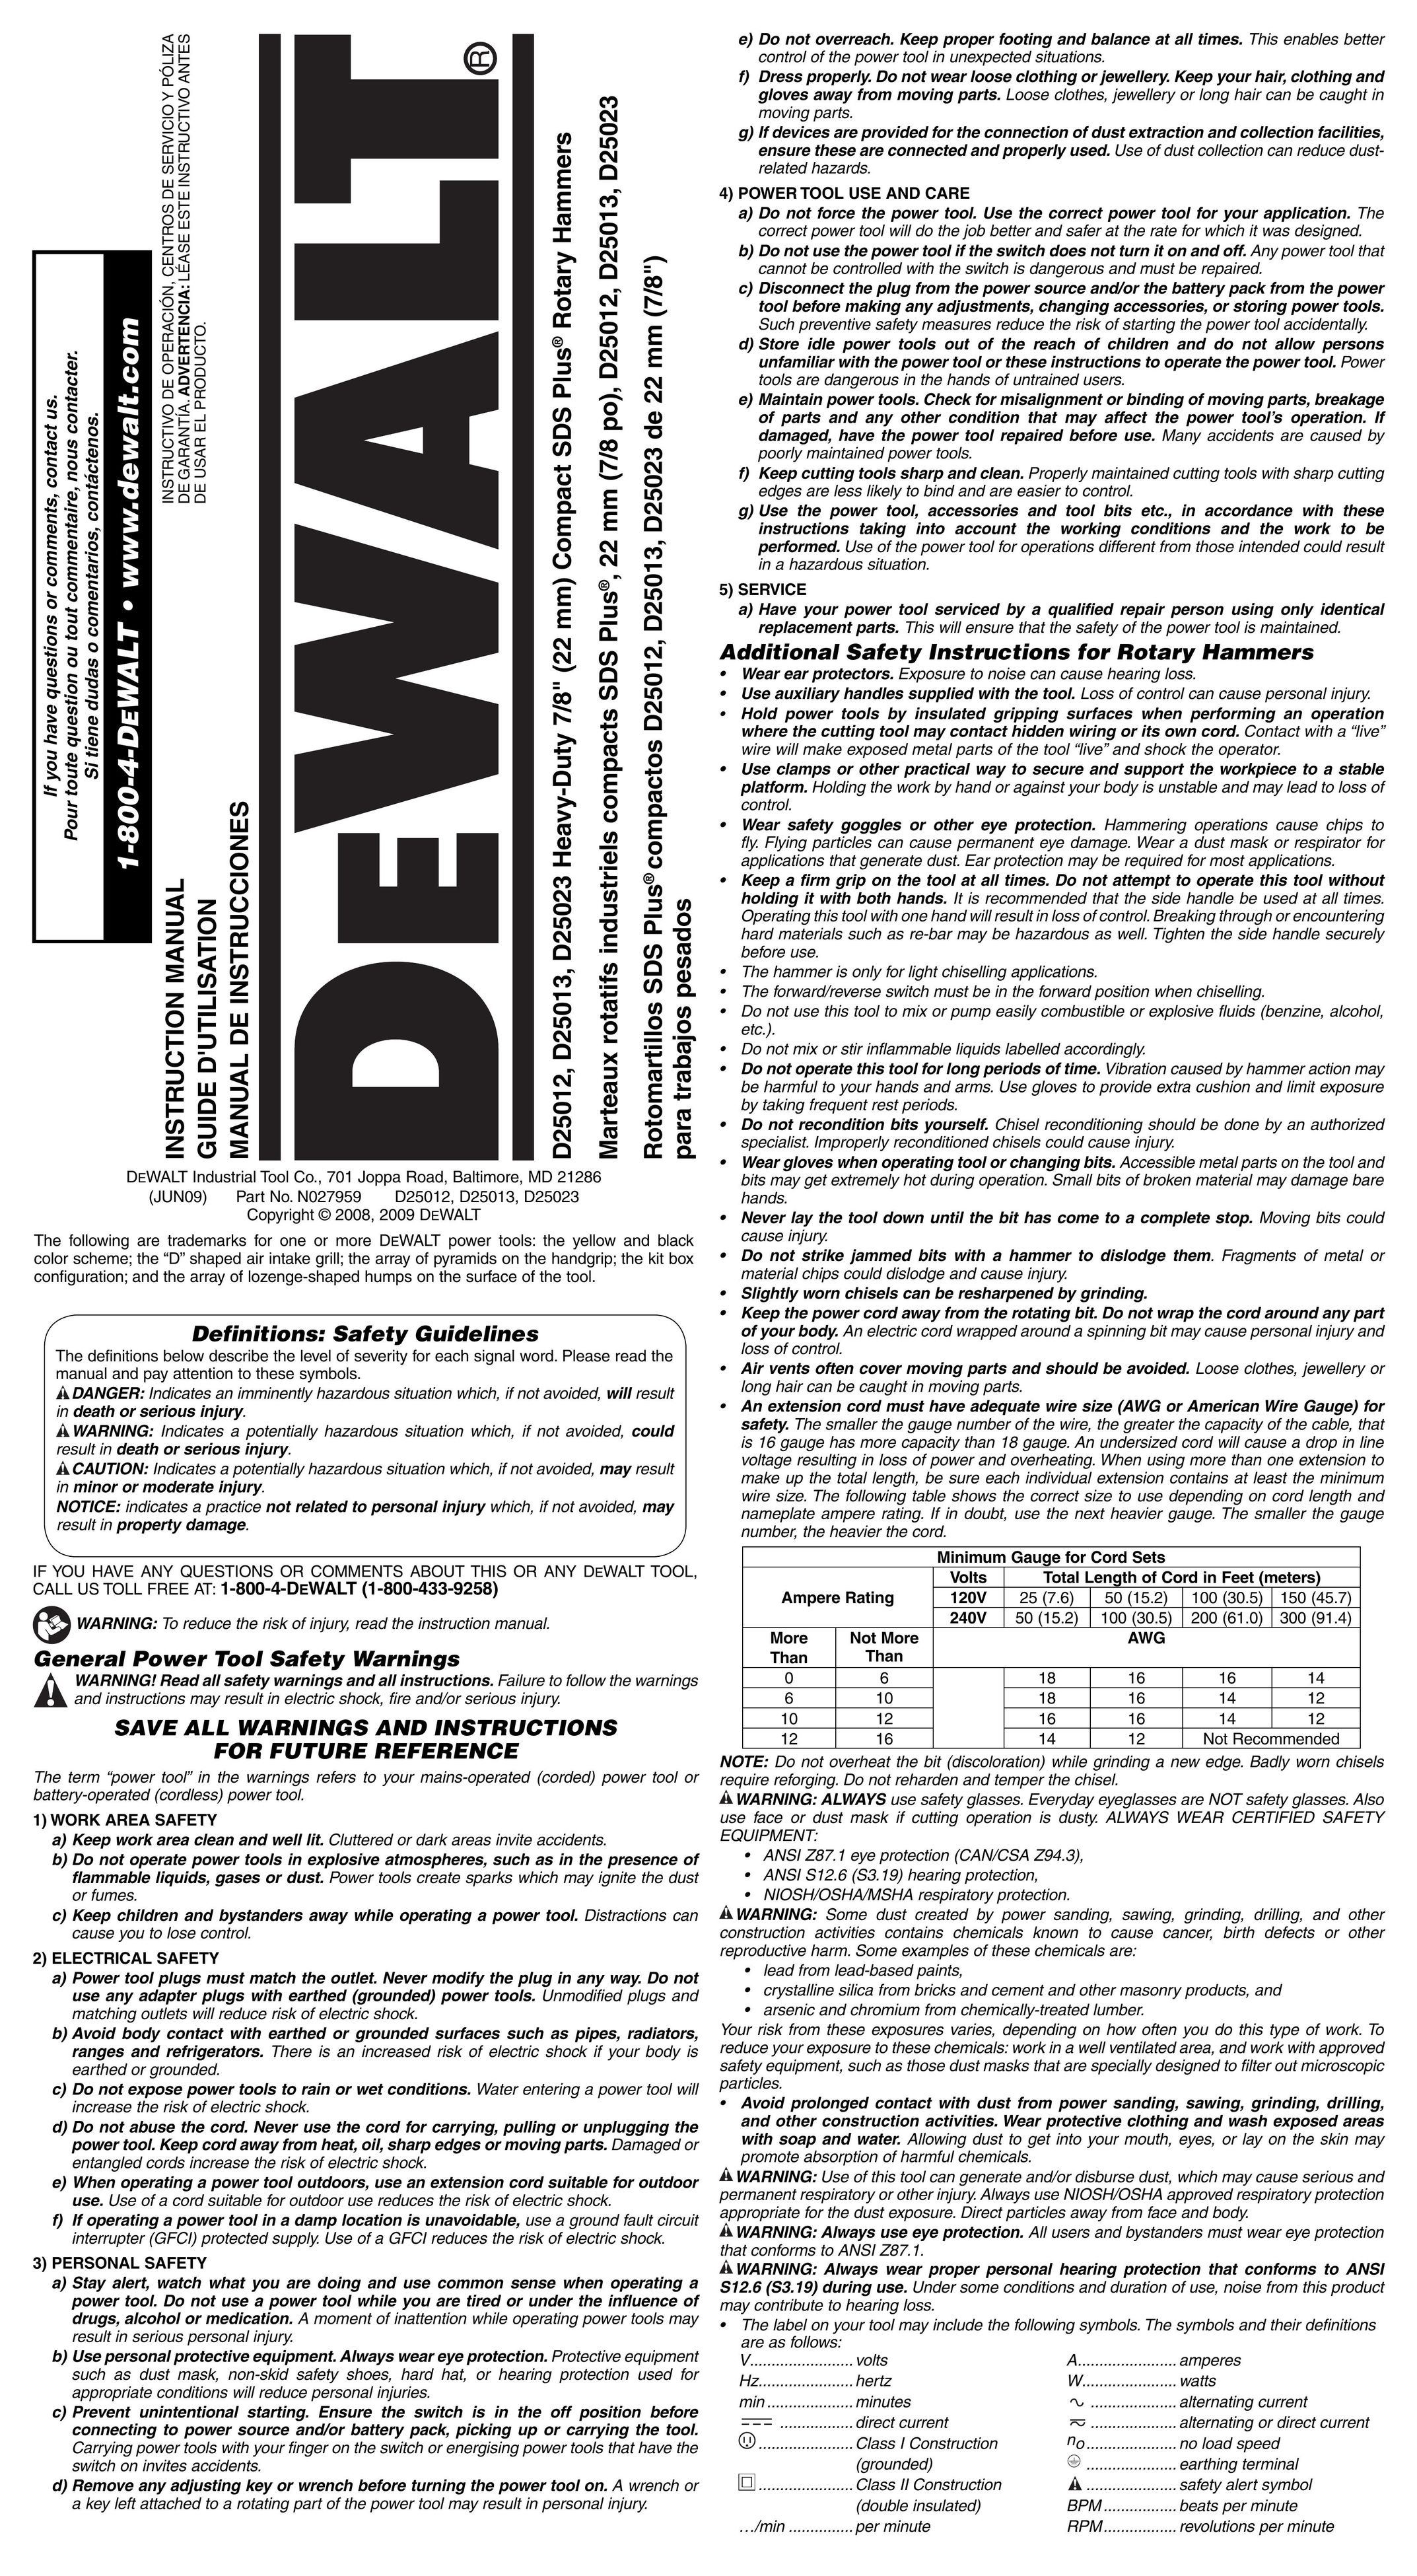 DeWalt N027959 Power Hammer User Manual